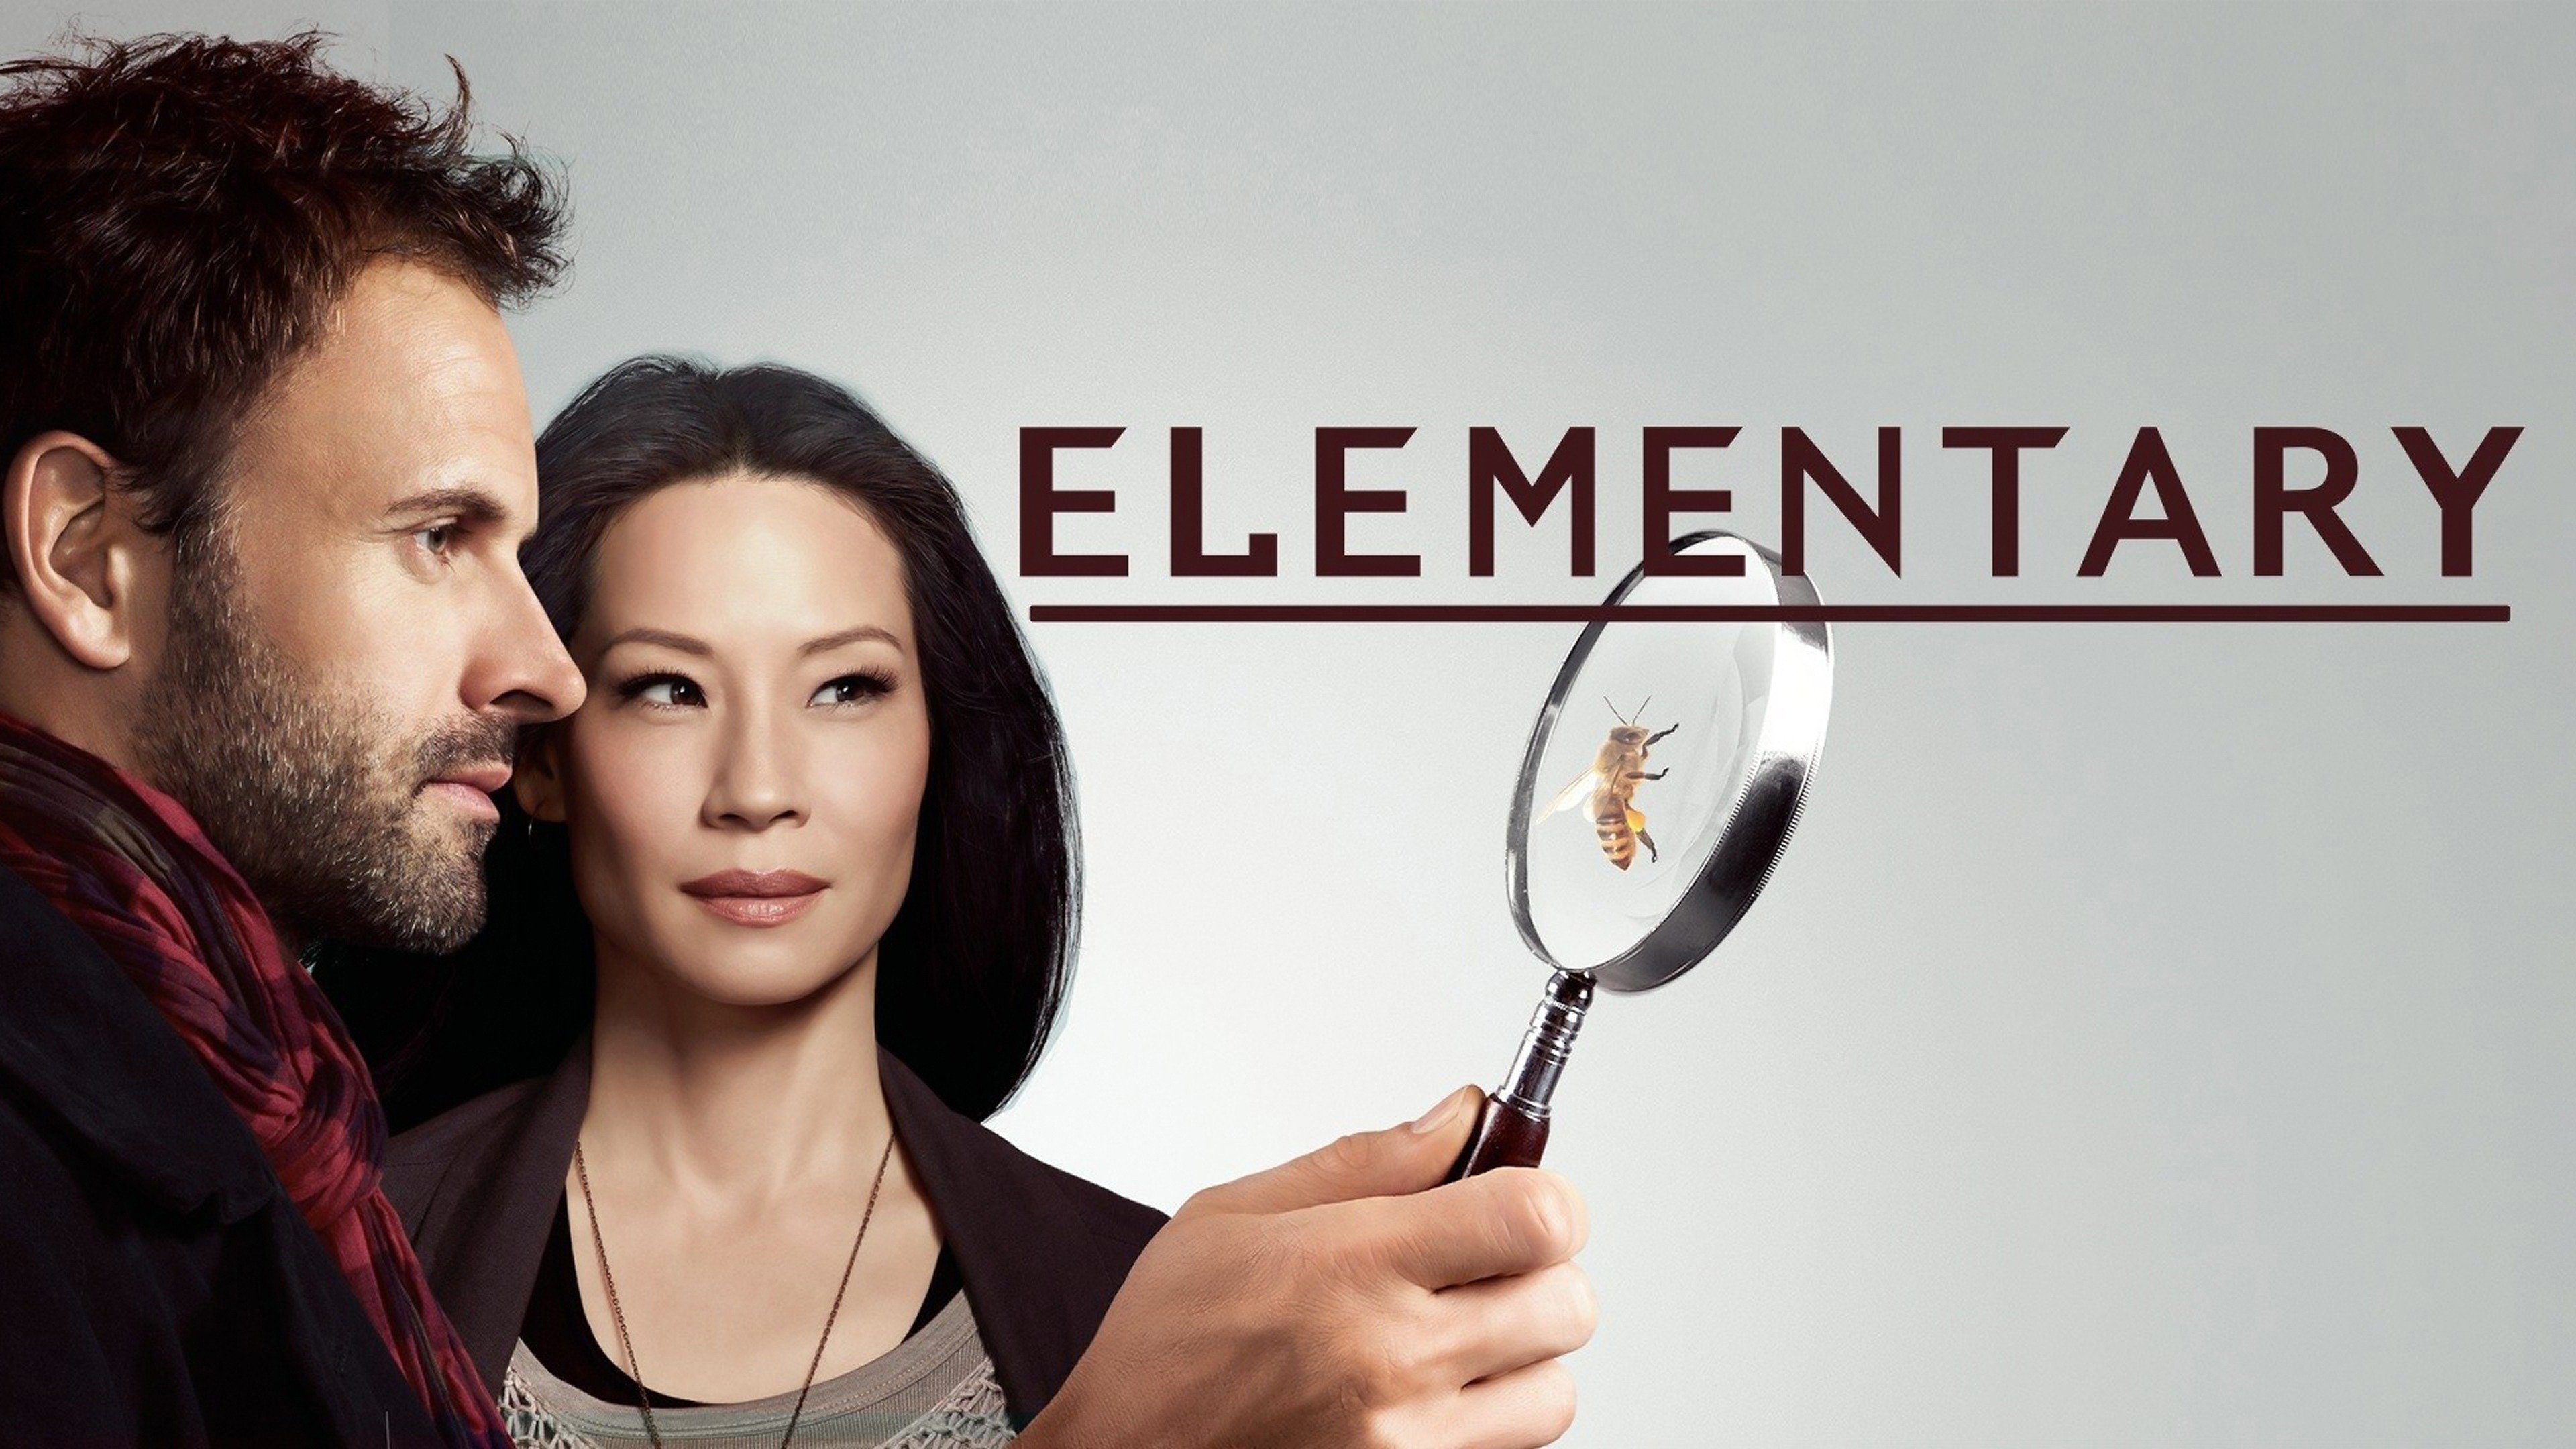 Elementary - CBS Series - Where To Watch